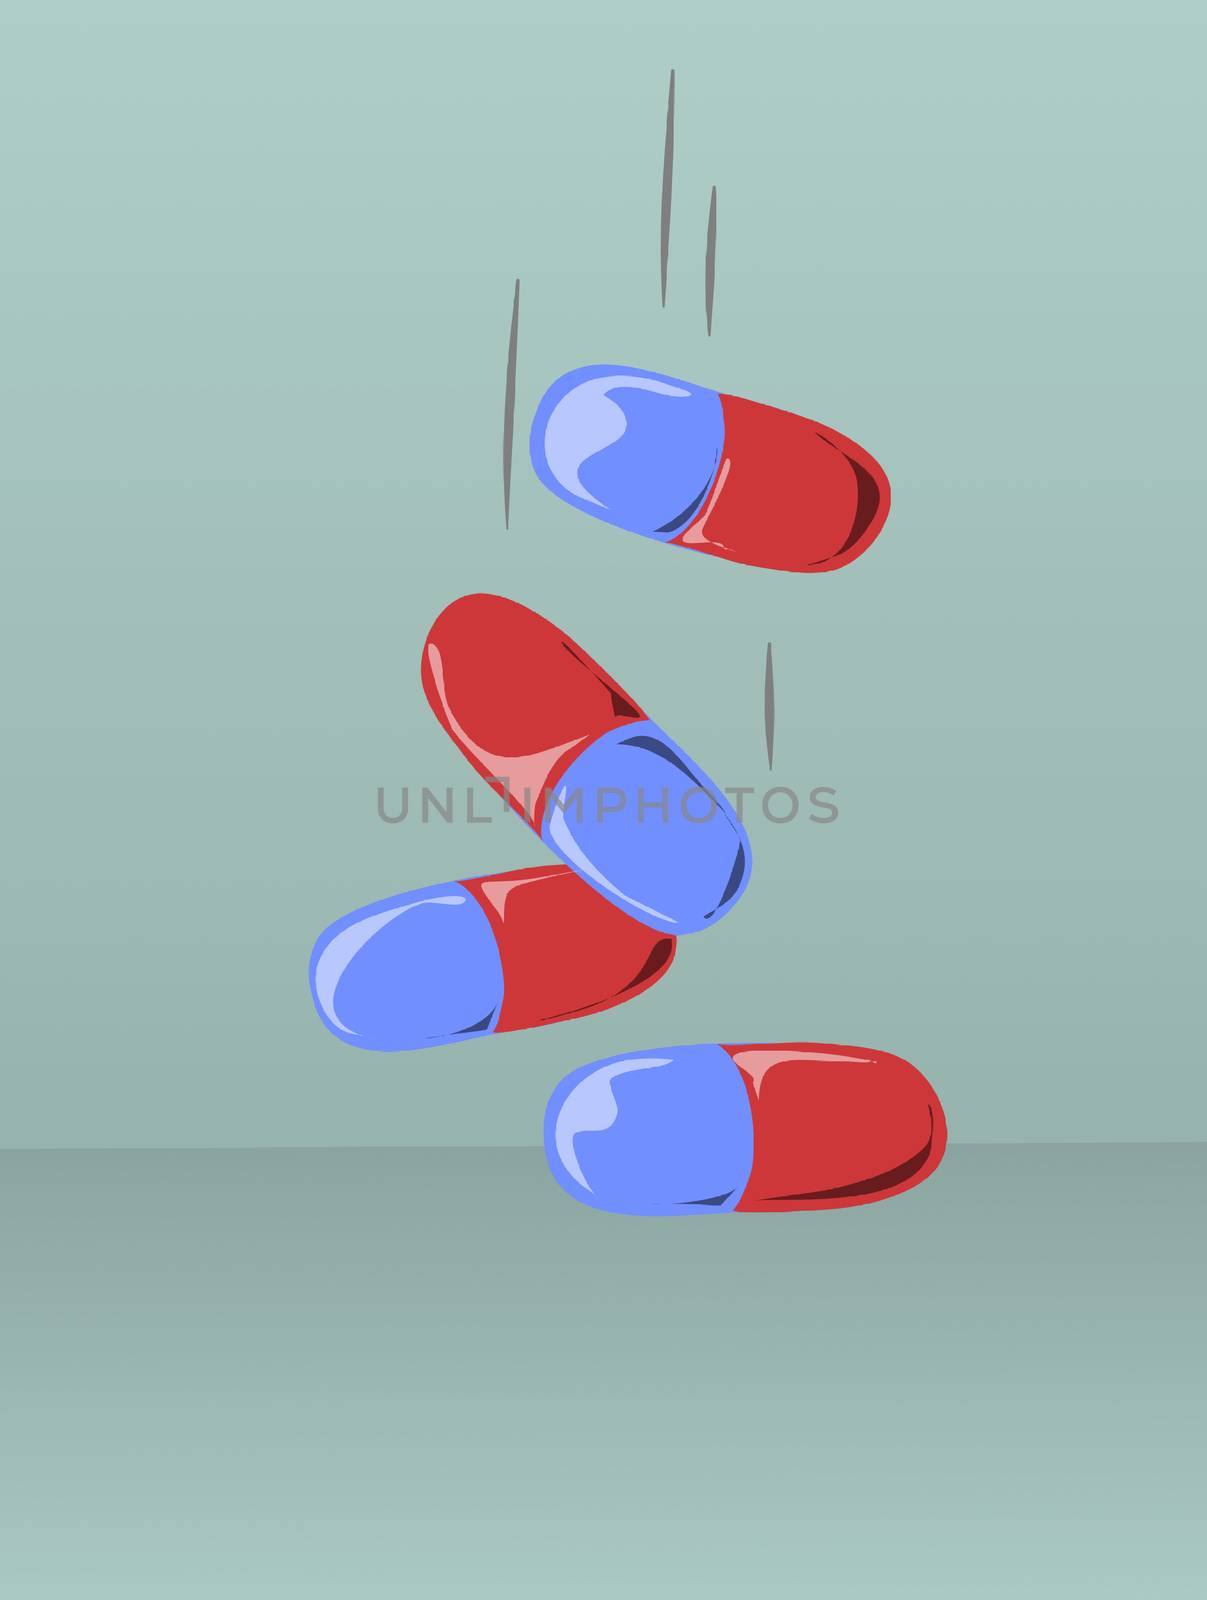 pills colors by osvaldo_medina